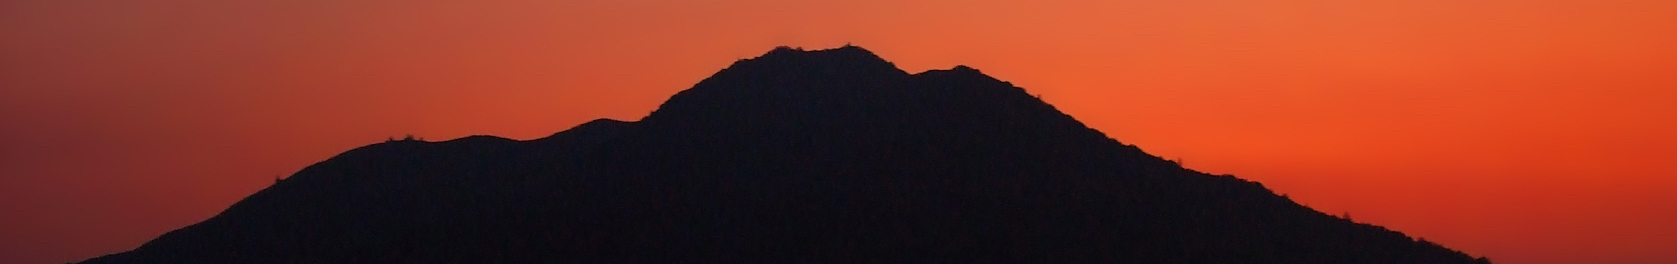 Mount Tamalpais (photo by Brent Peters http://www.derangedtaco.com)